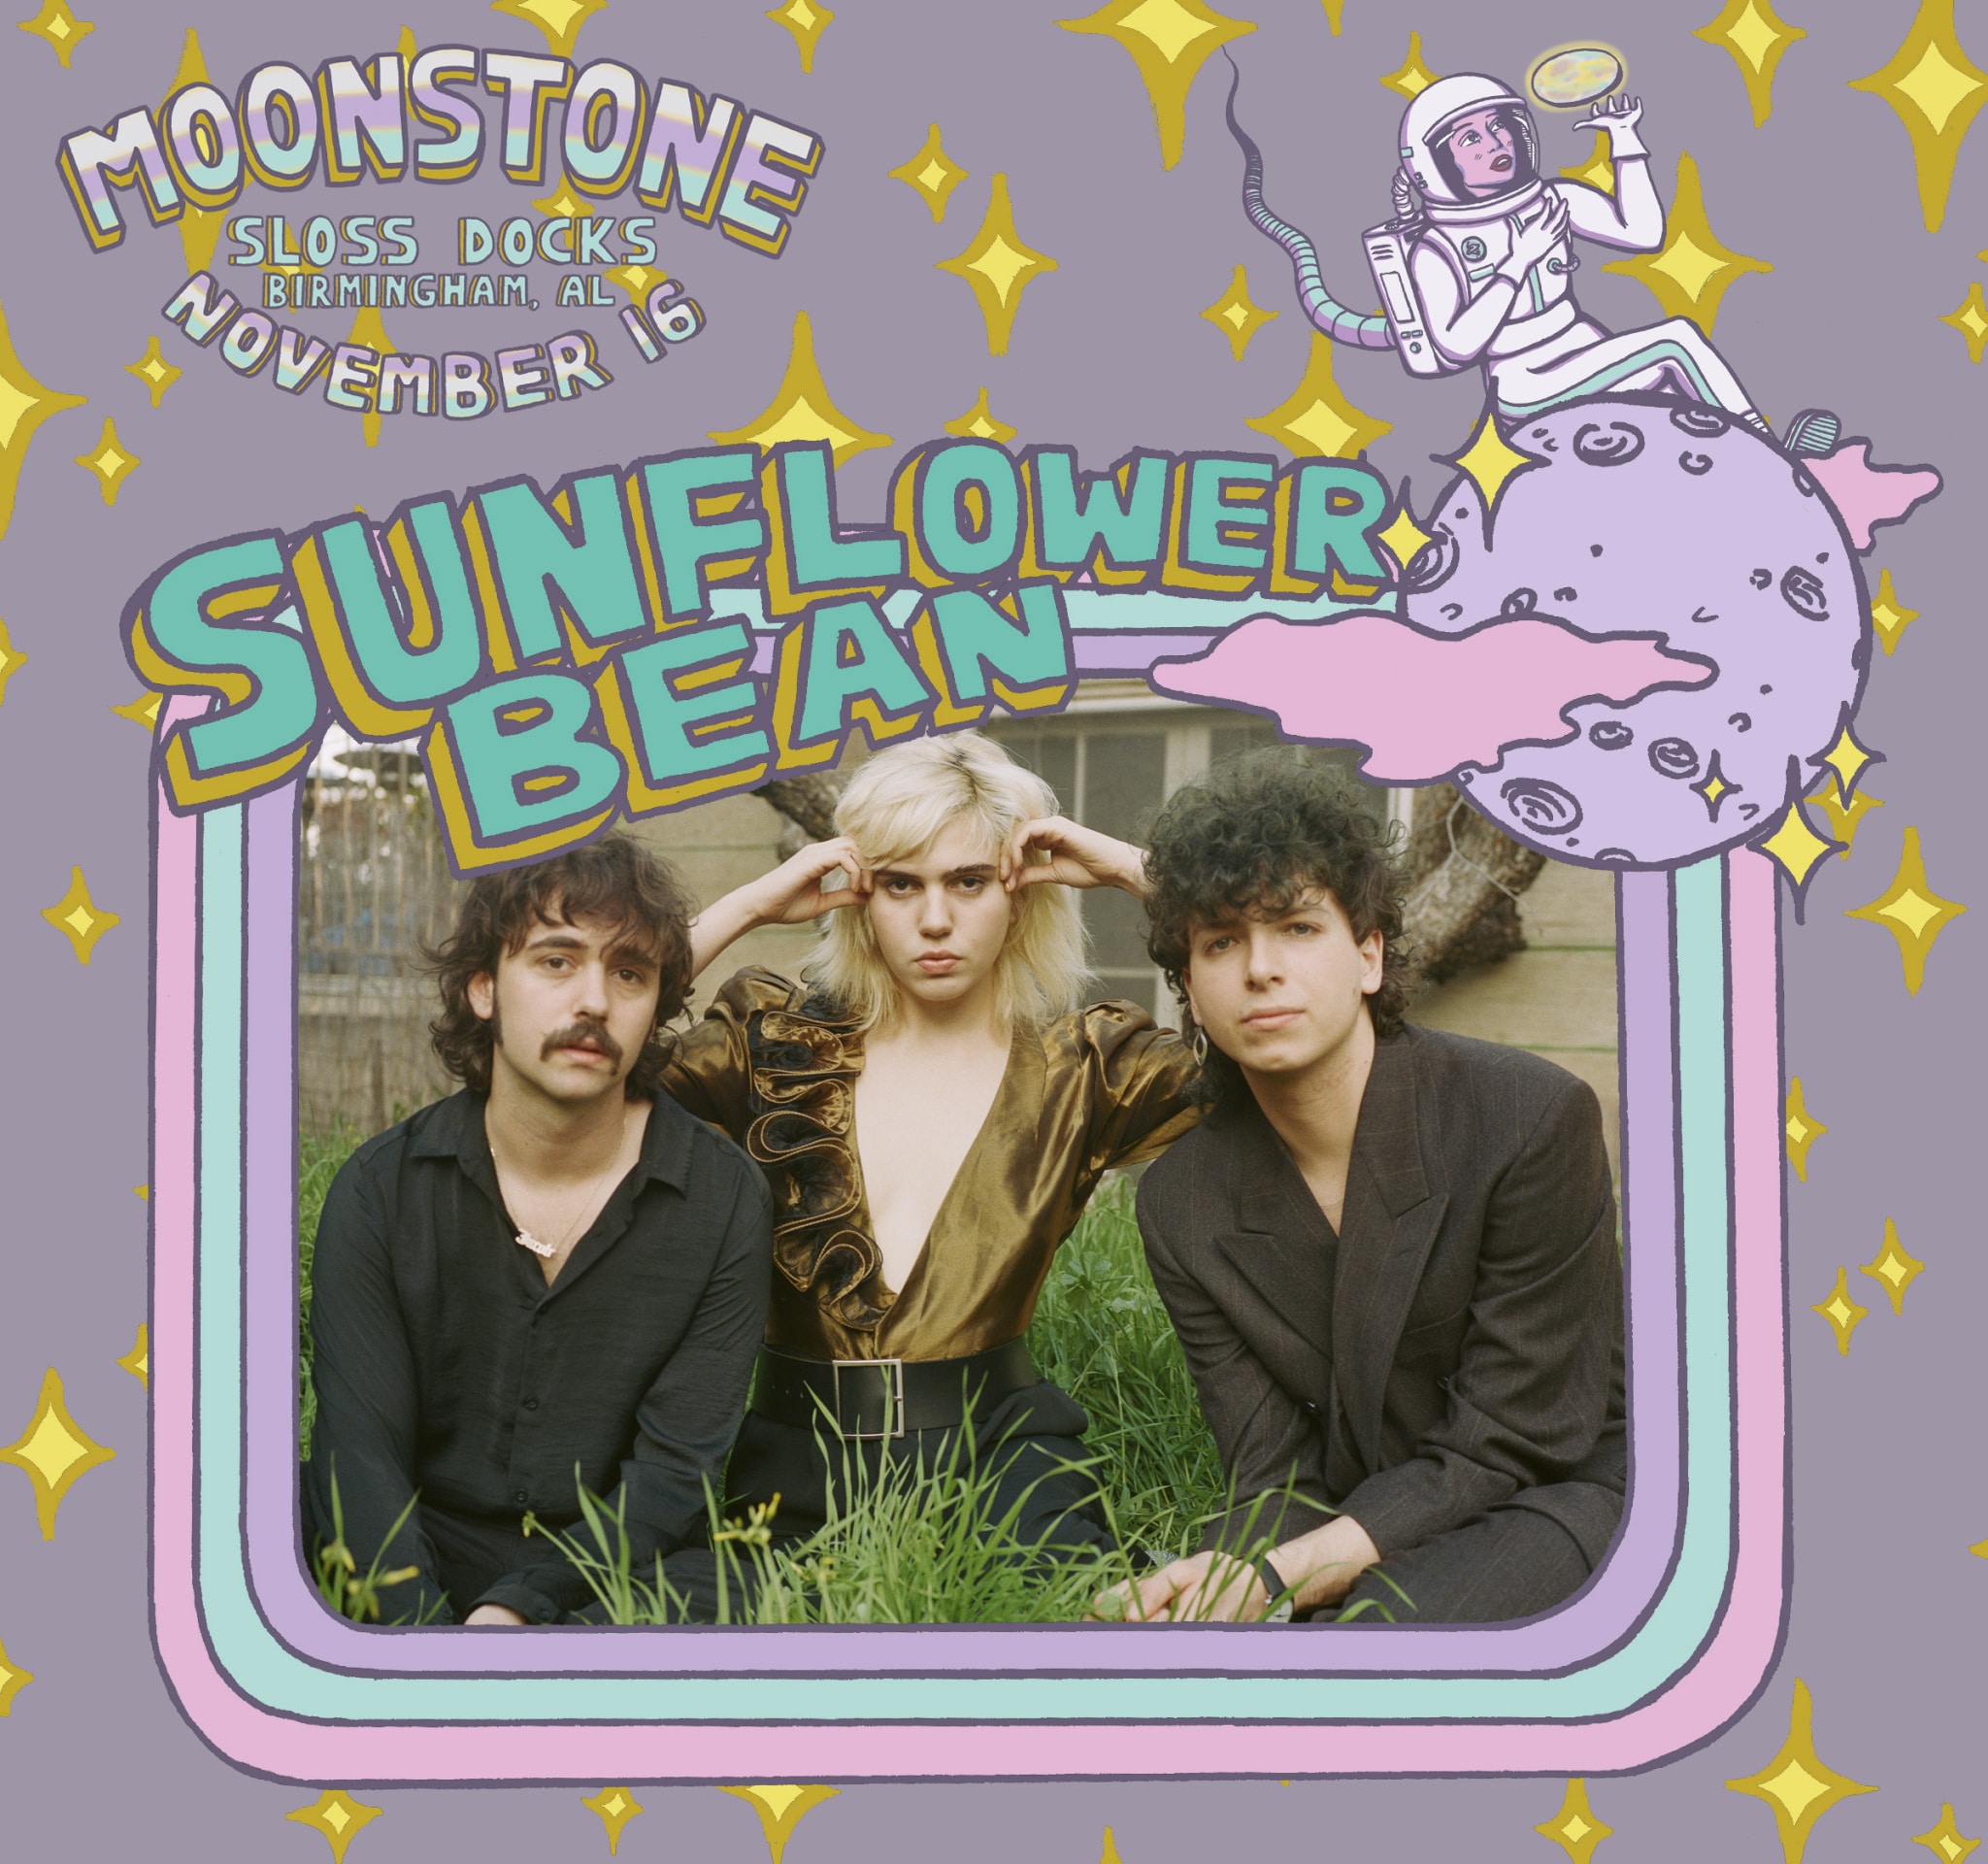 sunflowerbean announce Moonstone Festival, a female focused music and arts fest, happening Nov. 16th at Sloss Docks. Win VIP tickets!